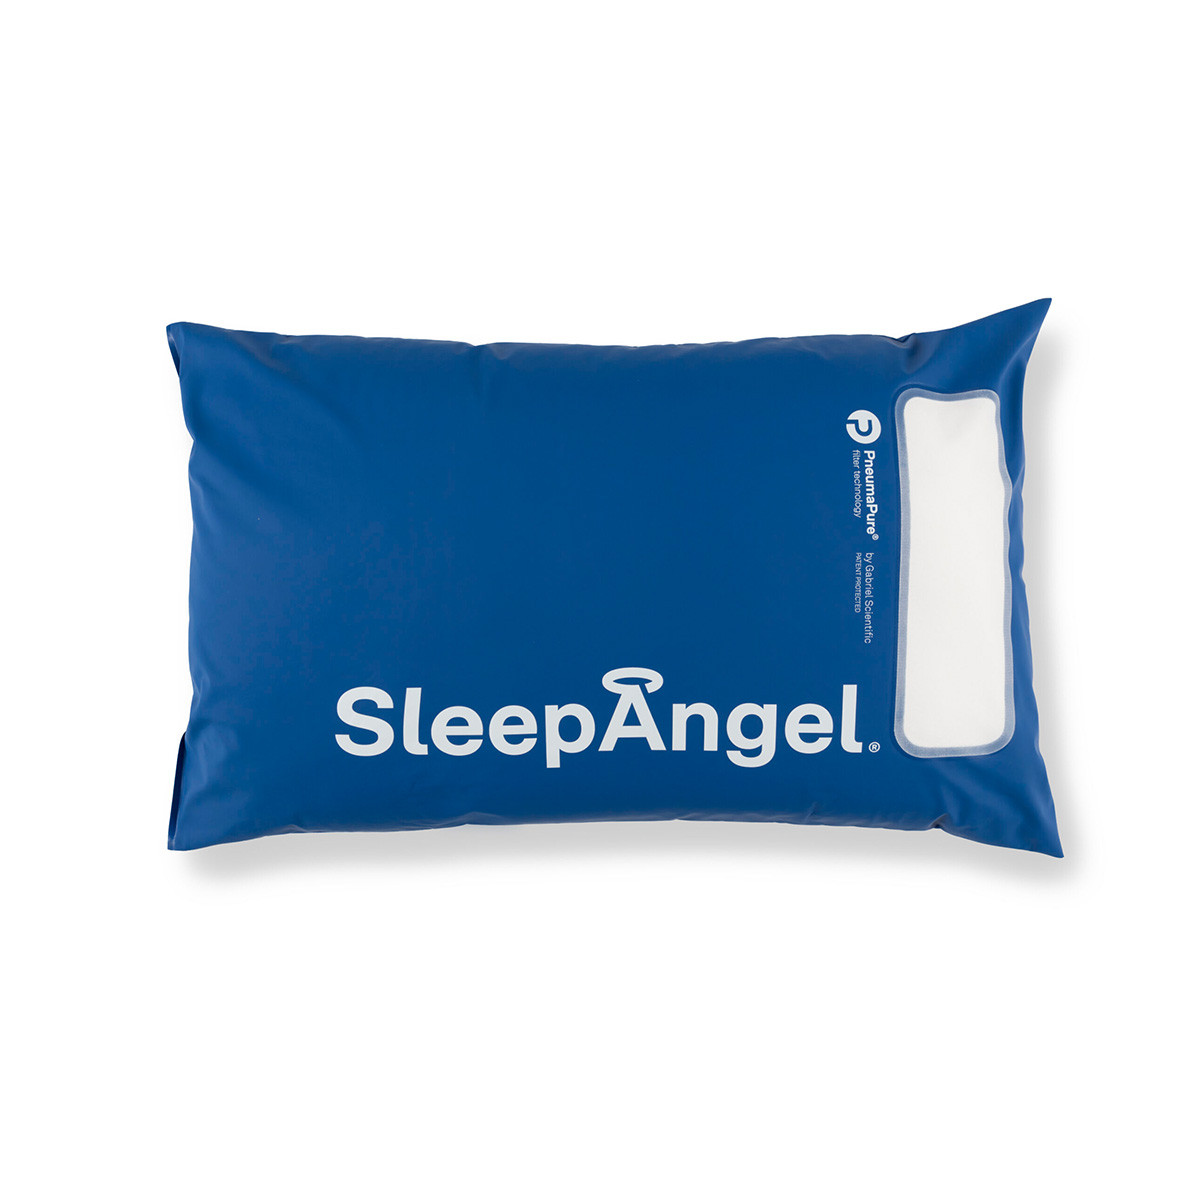 SleepAngel Medical Pillow - Customized Royal Blue or Medical White